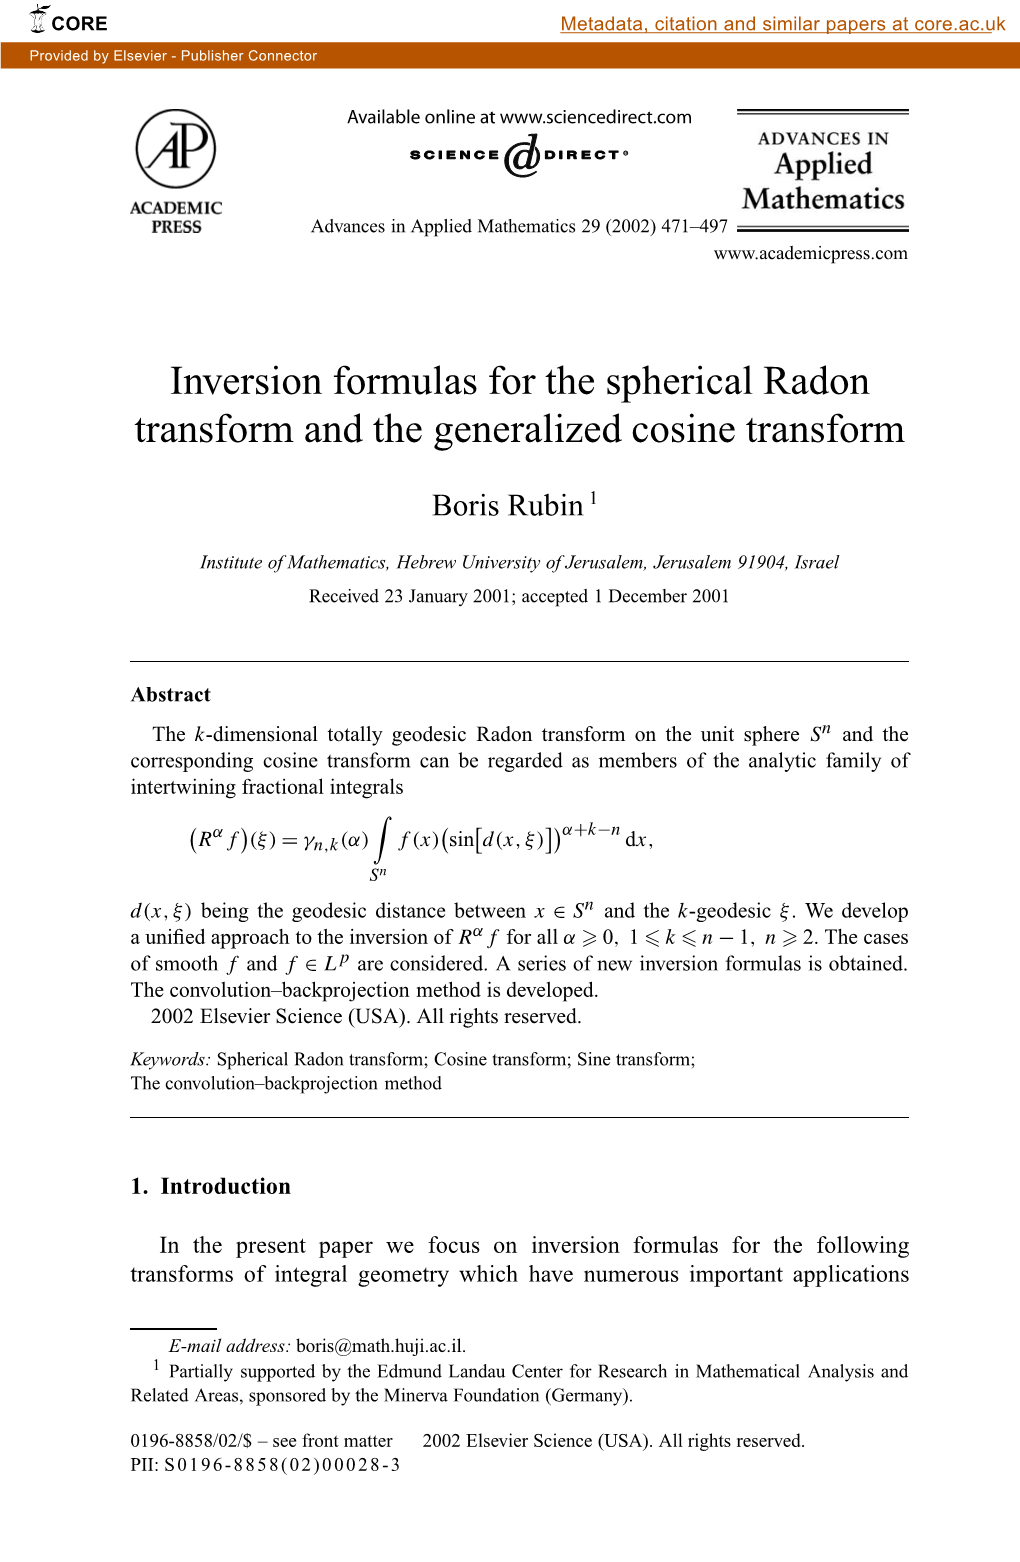 Inversion Formulas for the Spherical Radon Transform and the Generalized Cosine Transform